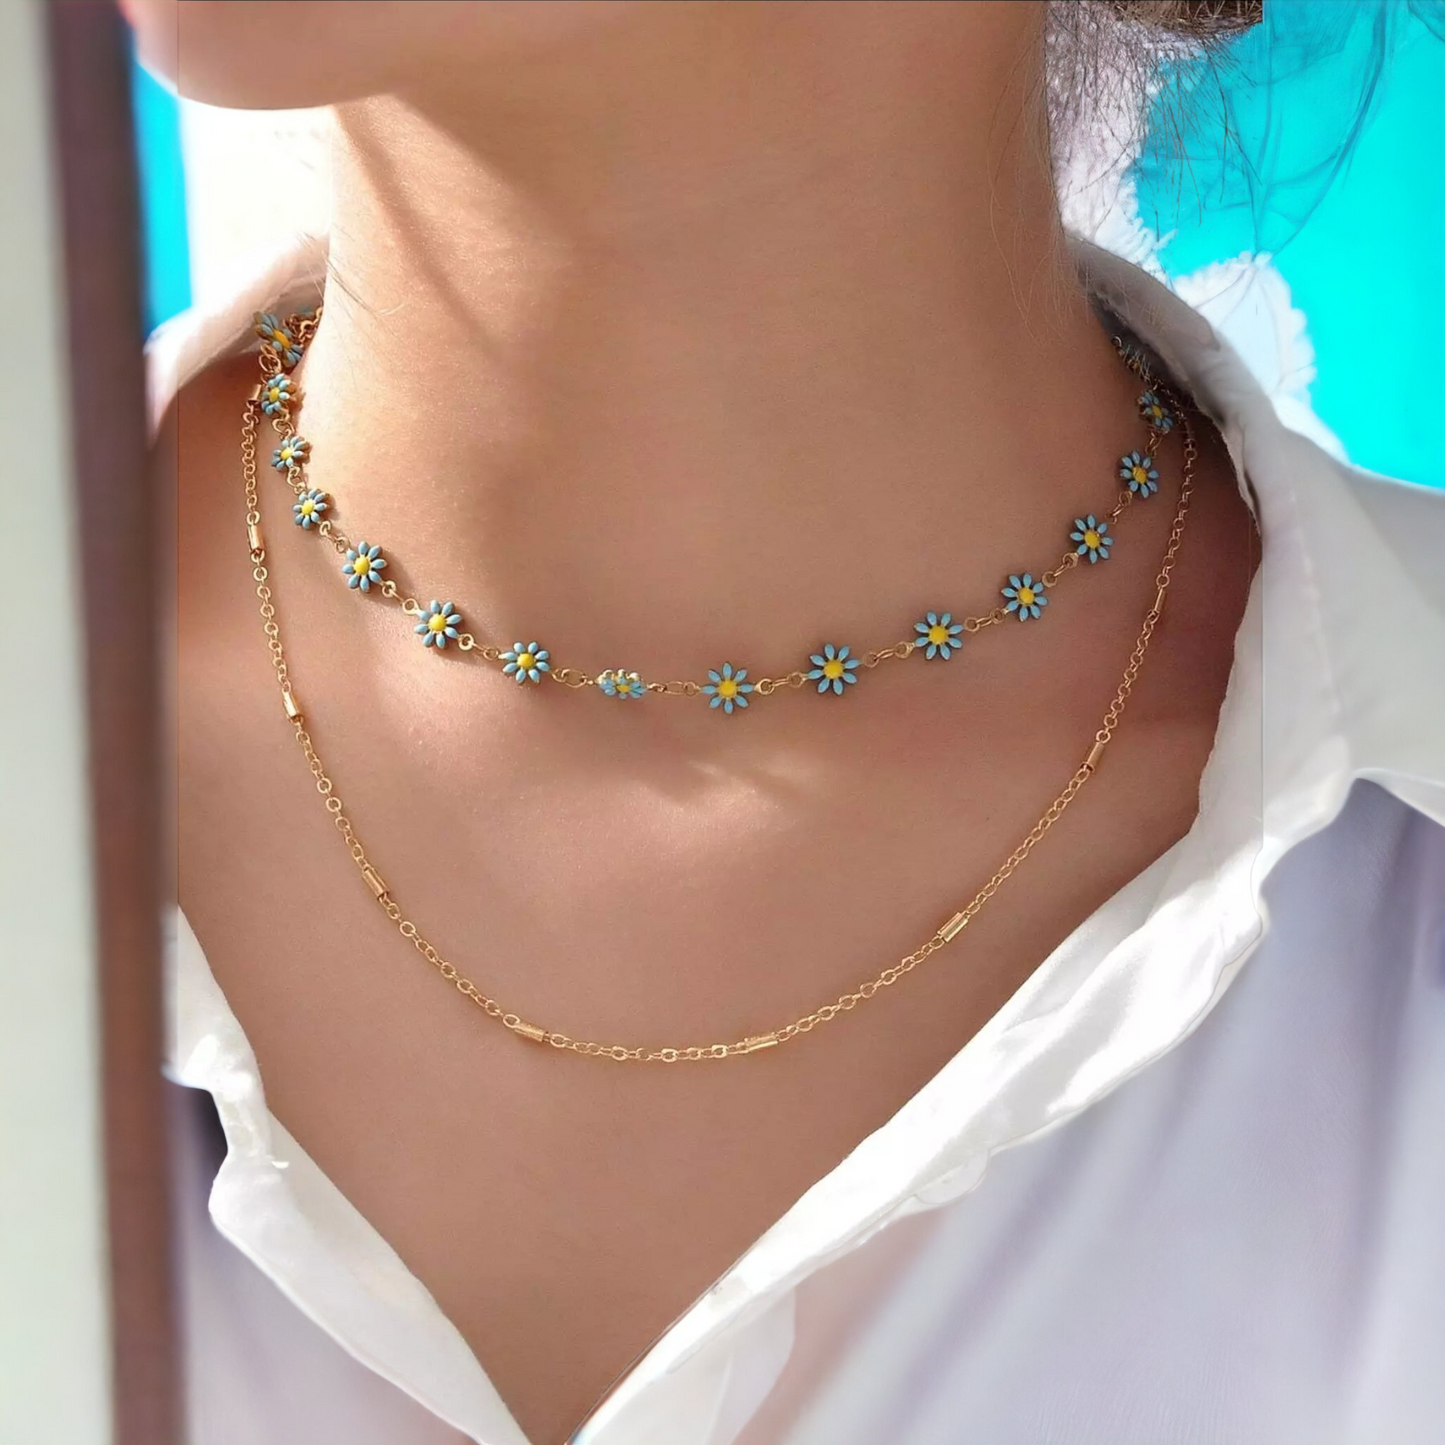 Sunshine & Daisy layered necklace